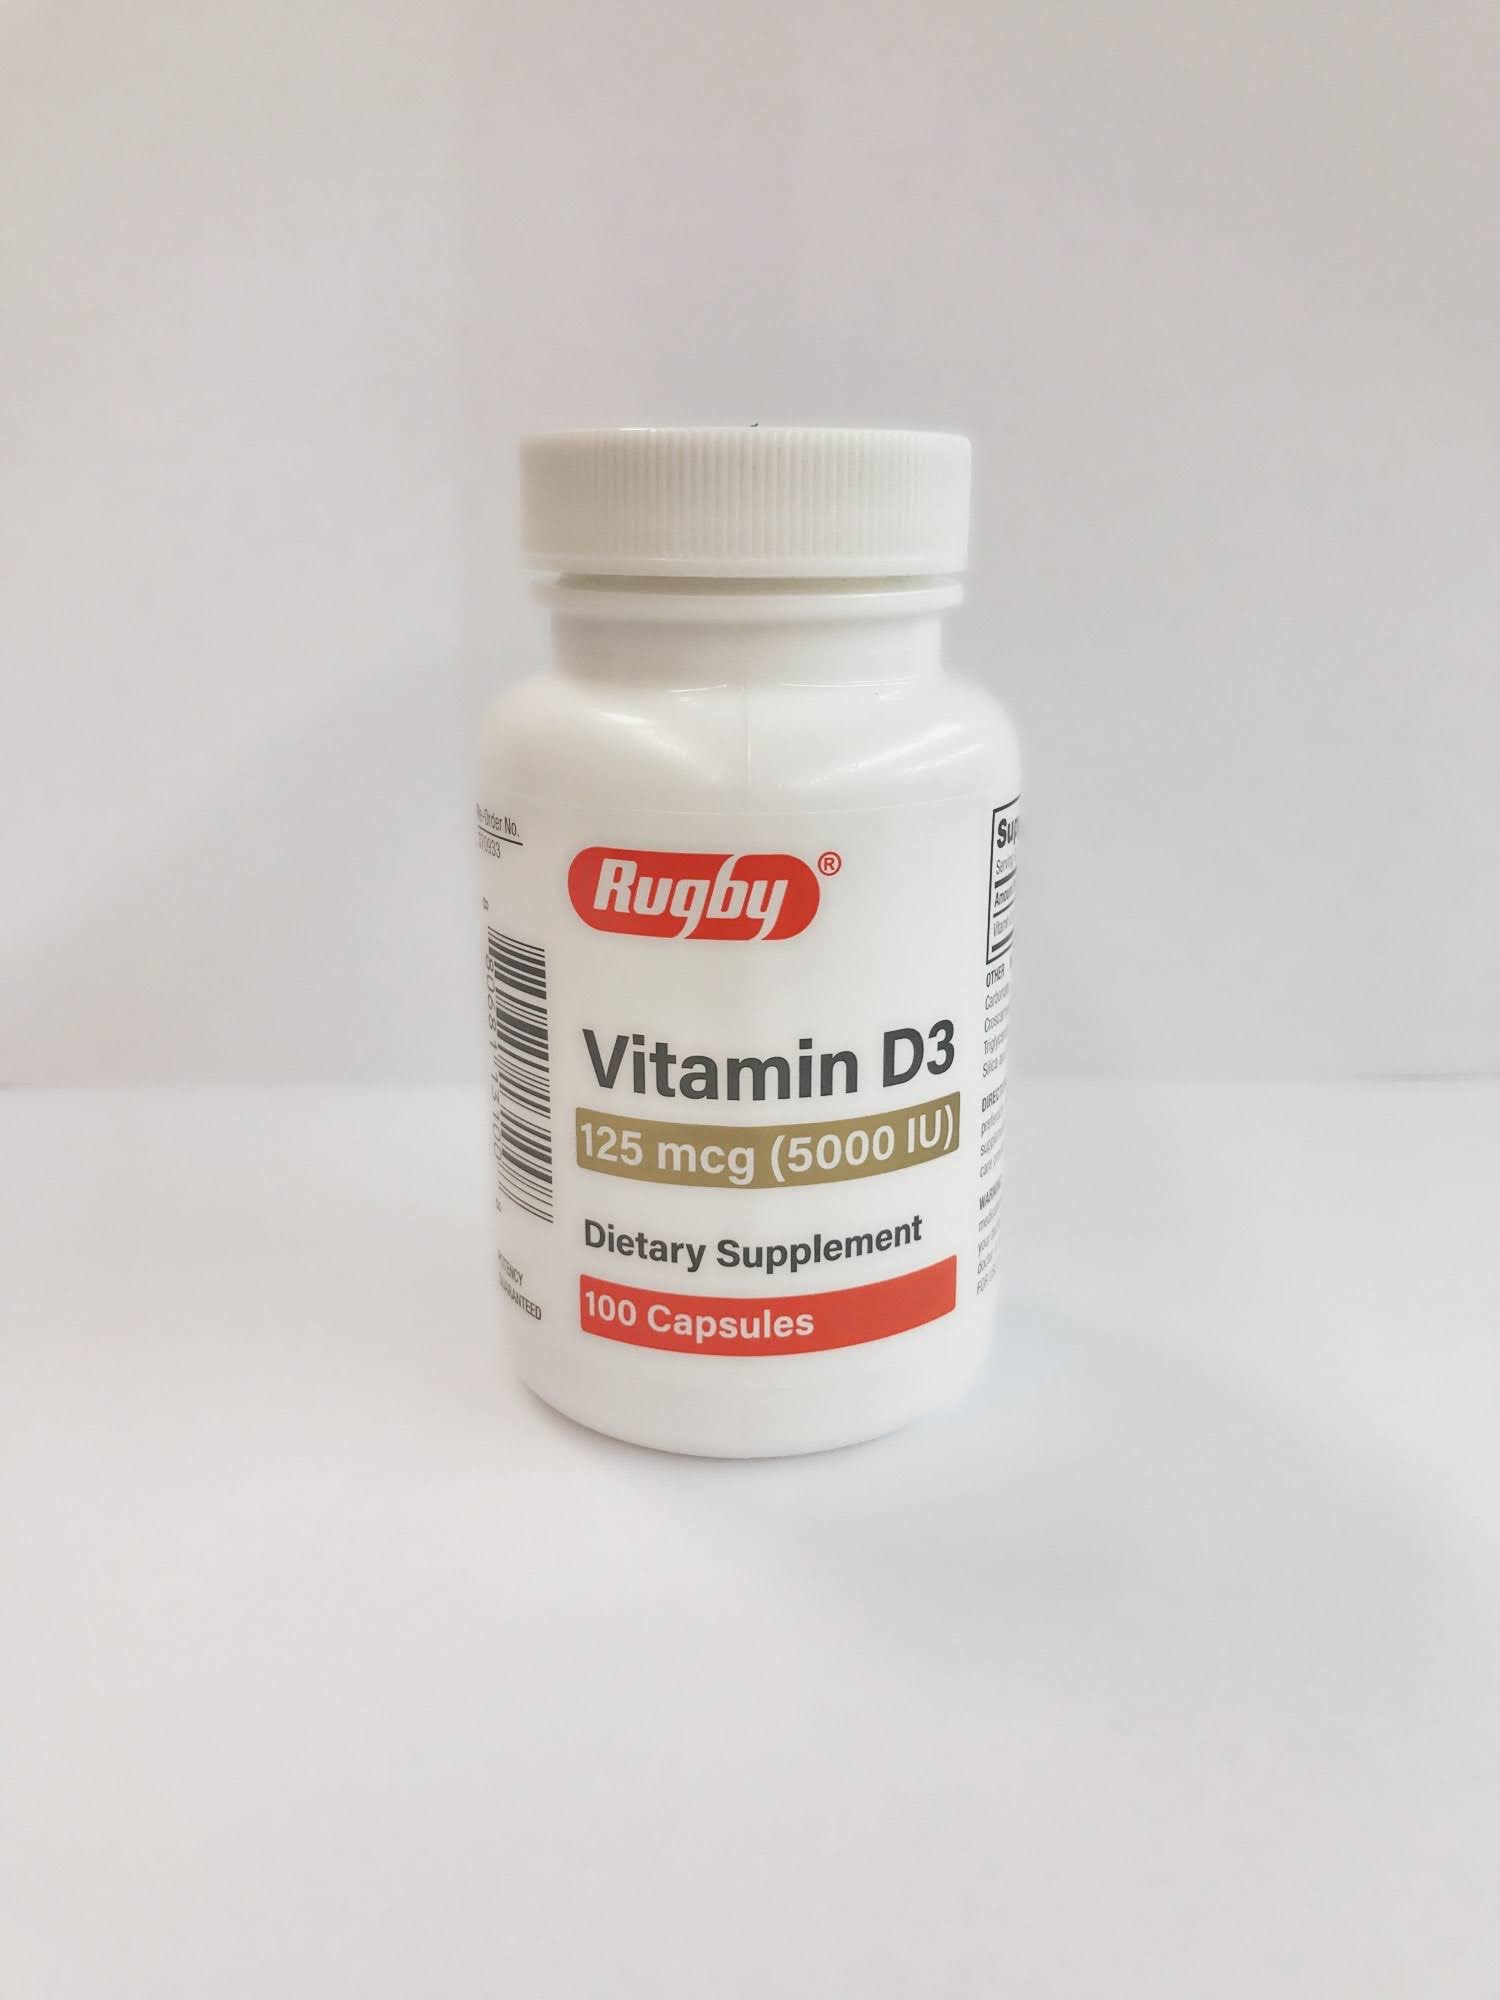 Rugby Vitamin D3, 125 mcg (5000 IU) 100 Capsules